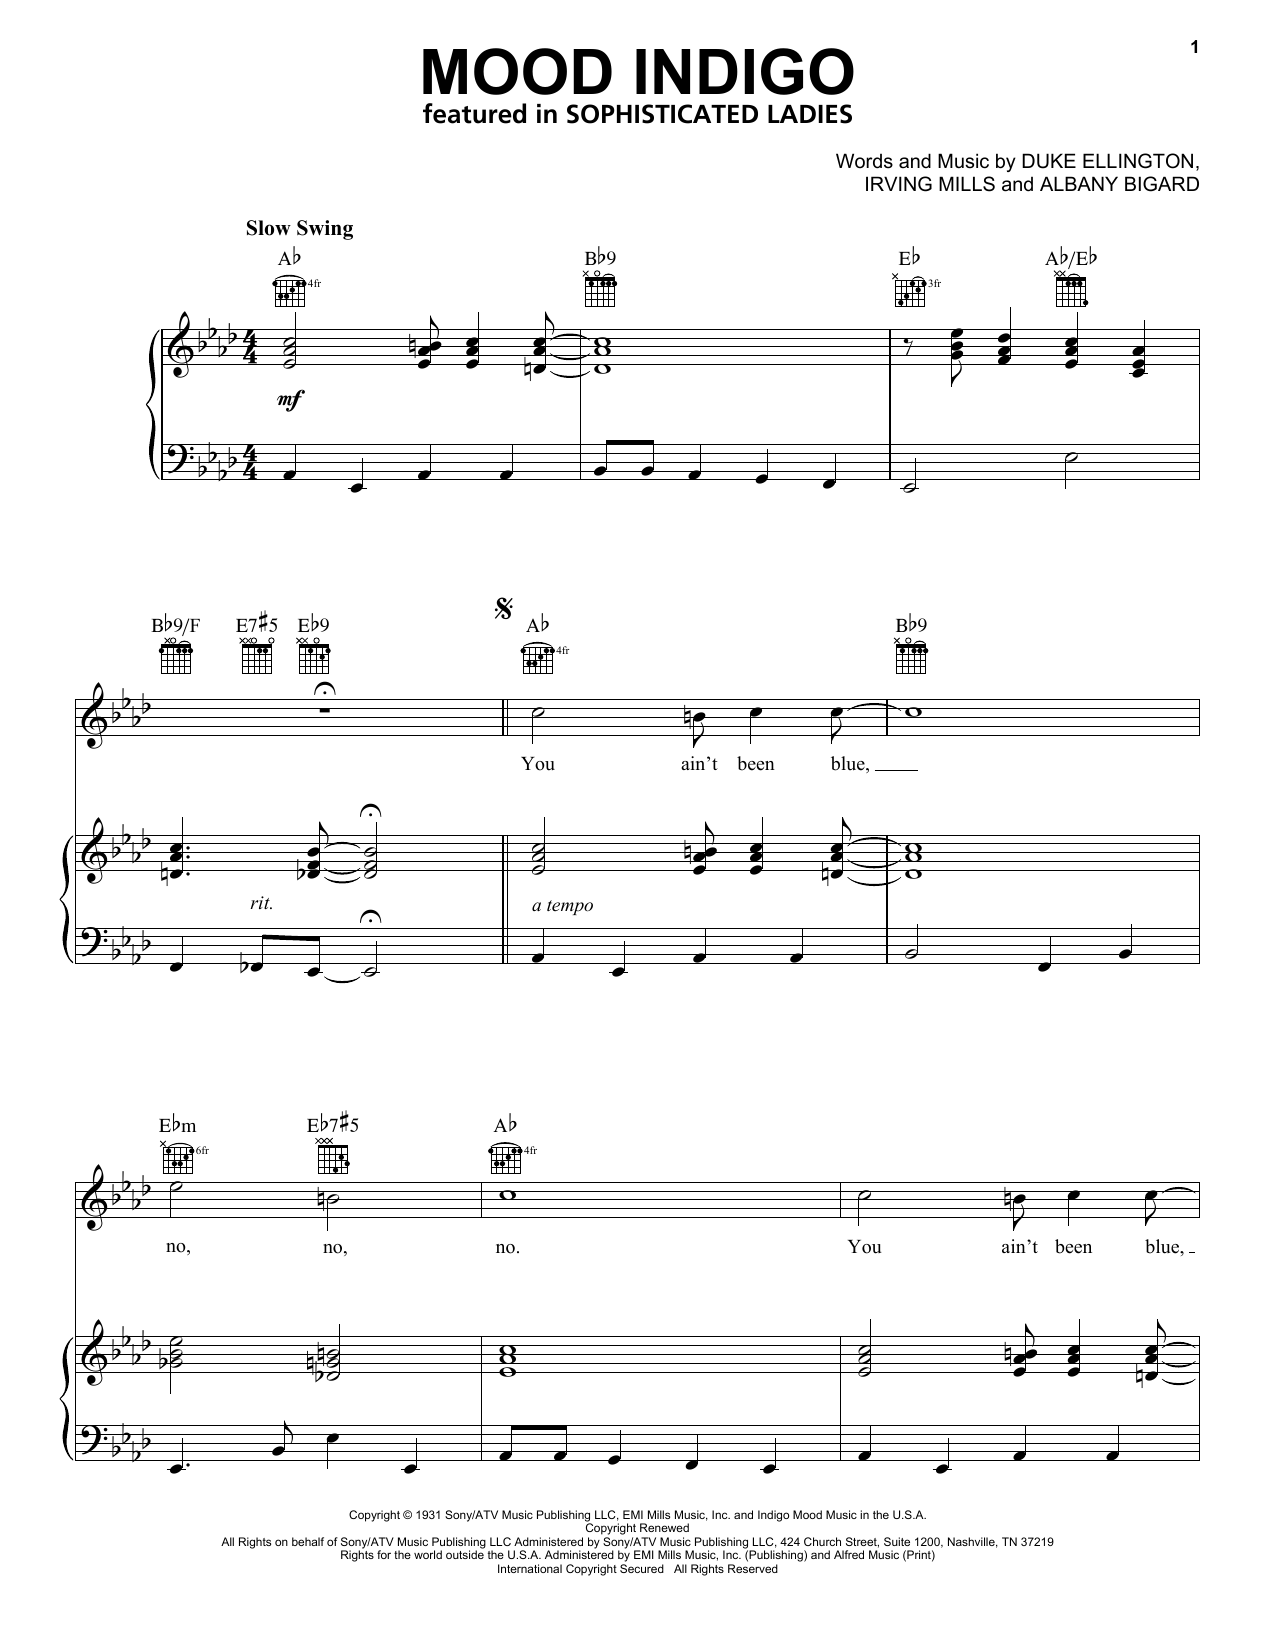 Duke Ellington Mood Indigo Sheet Music Notes & Chords for Clarinet - Download or Print PDF